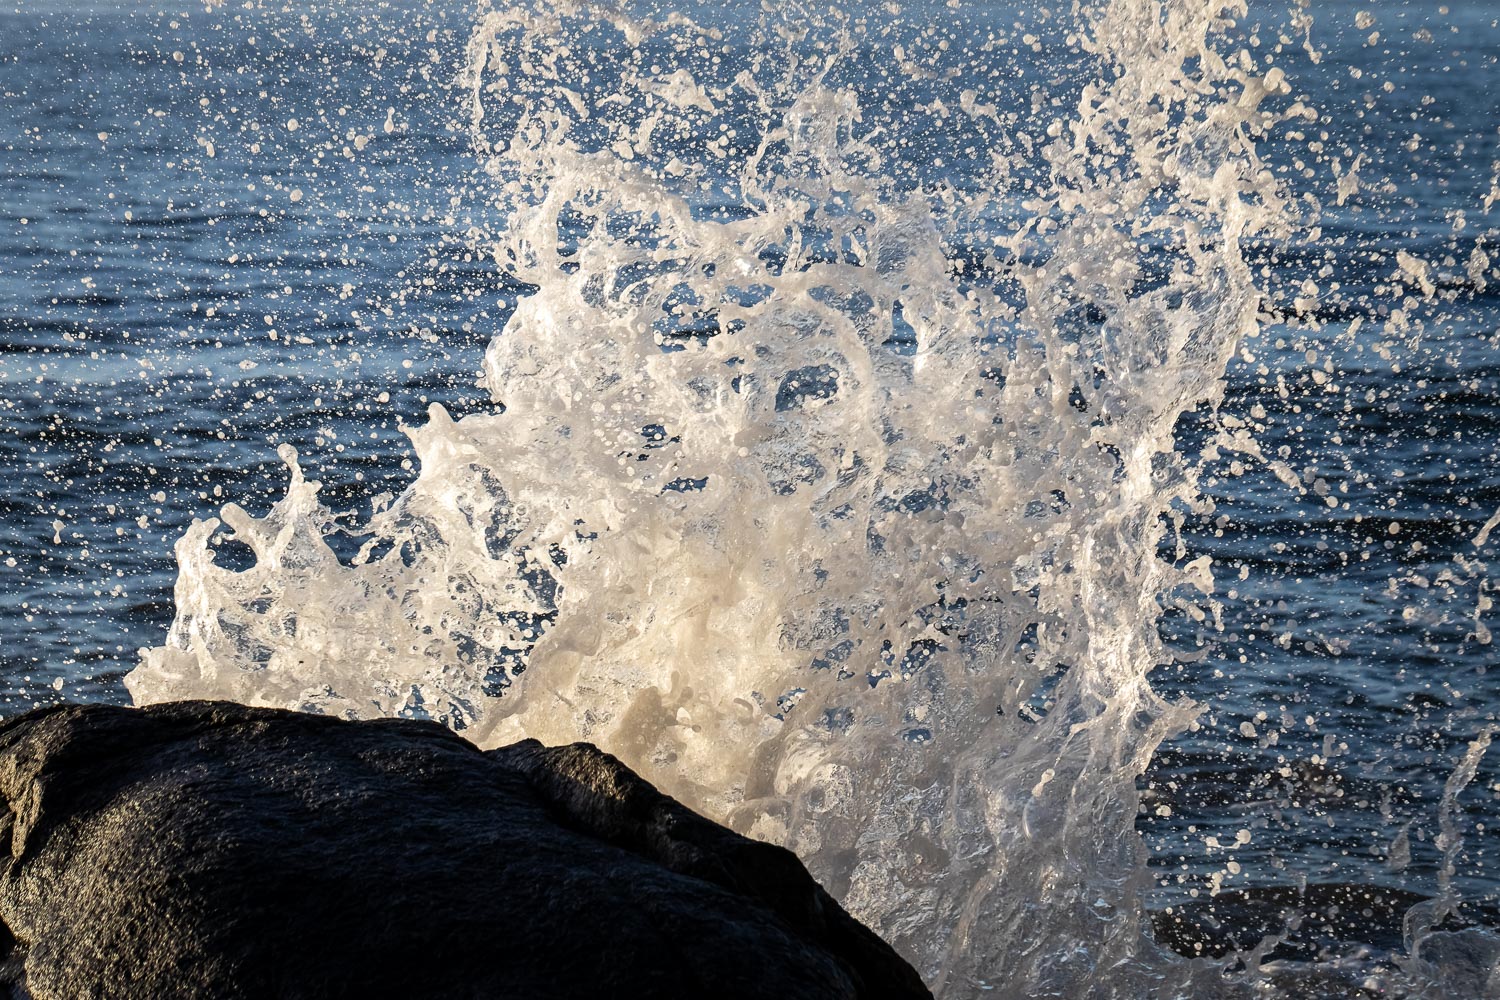 A wave splashing over a rock